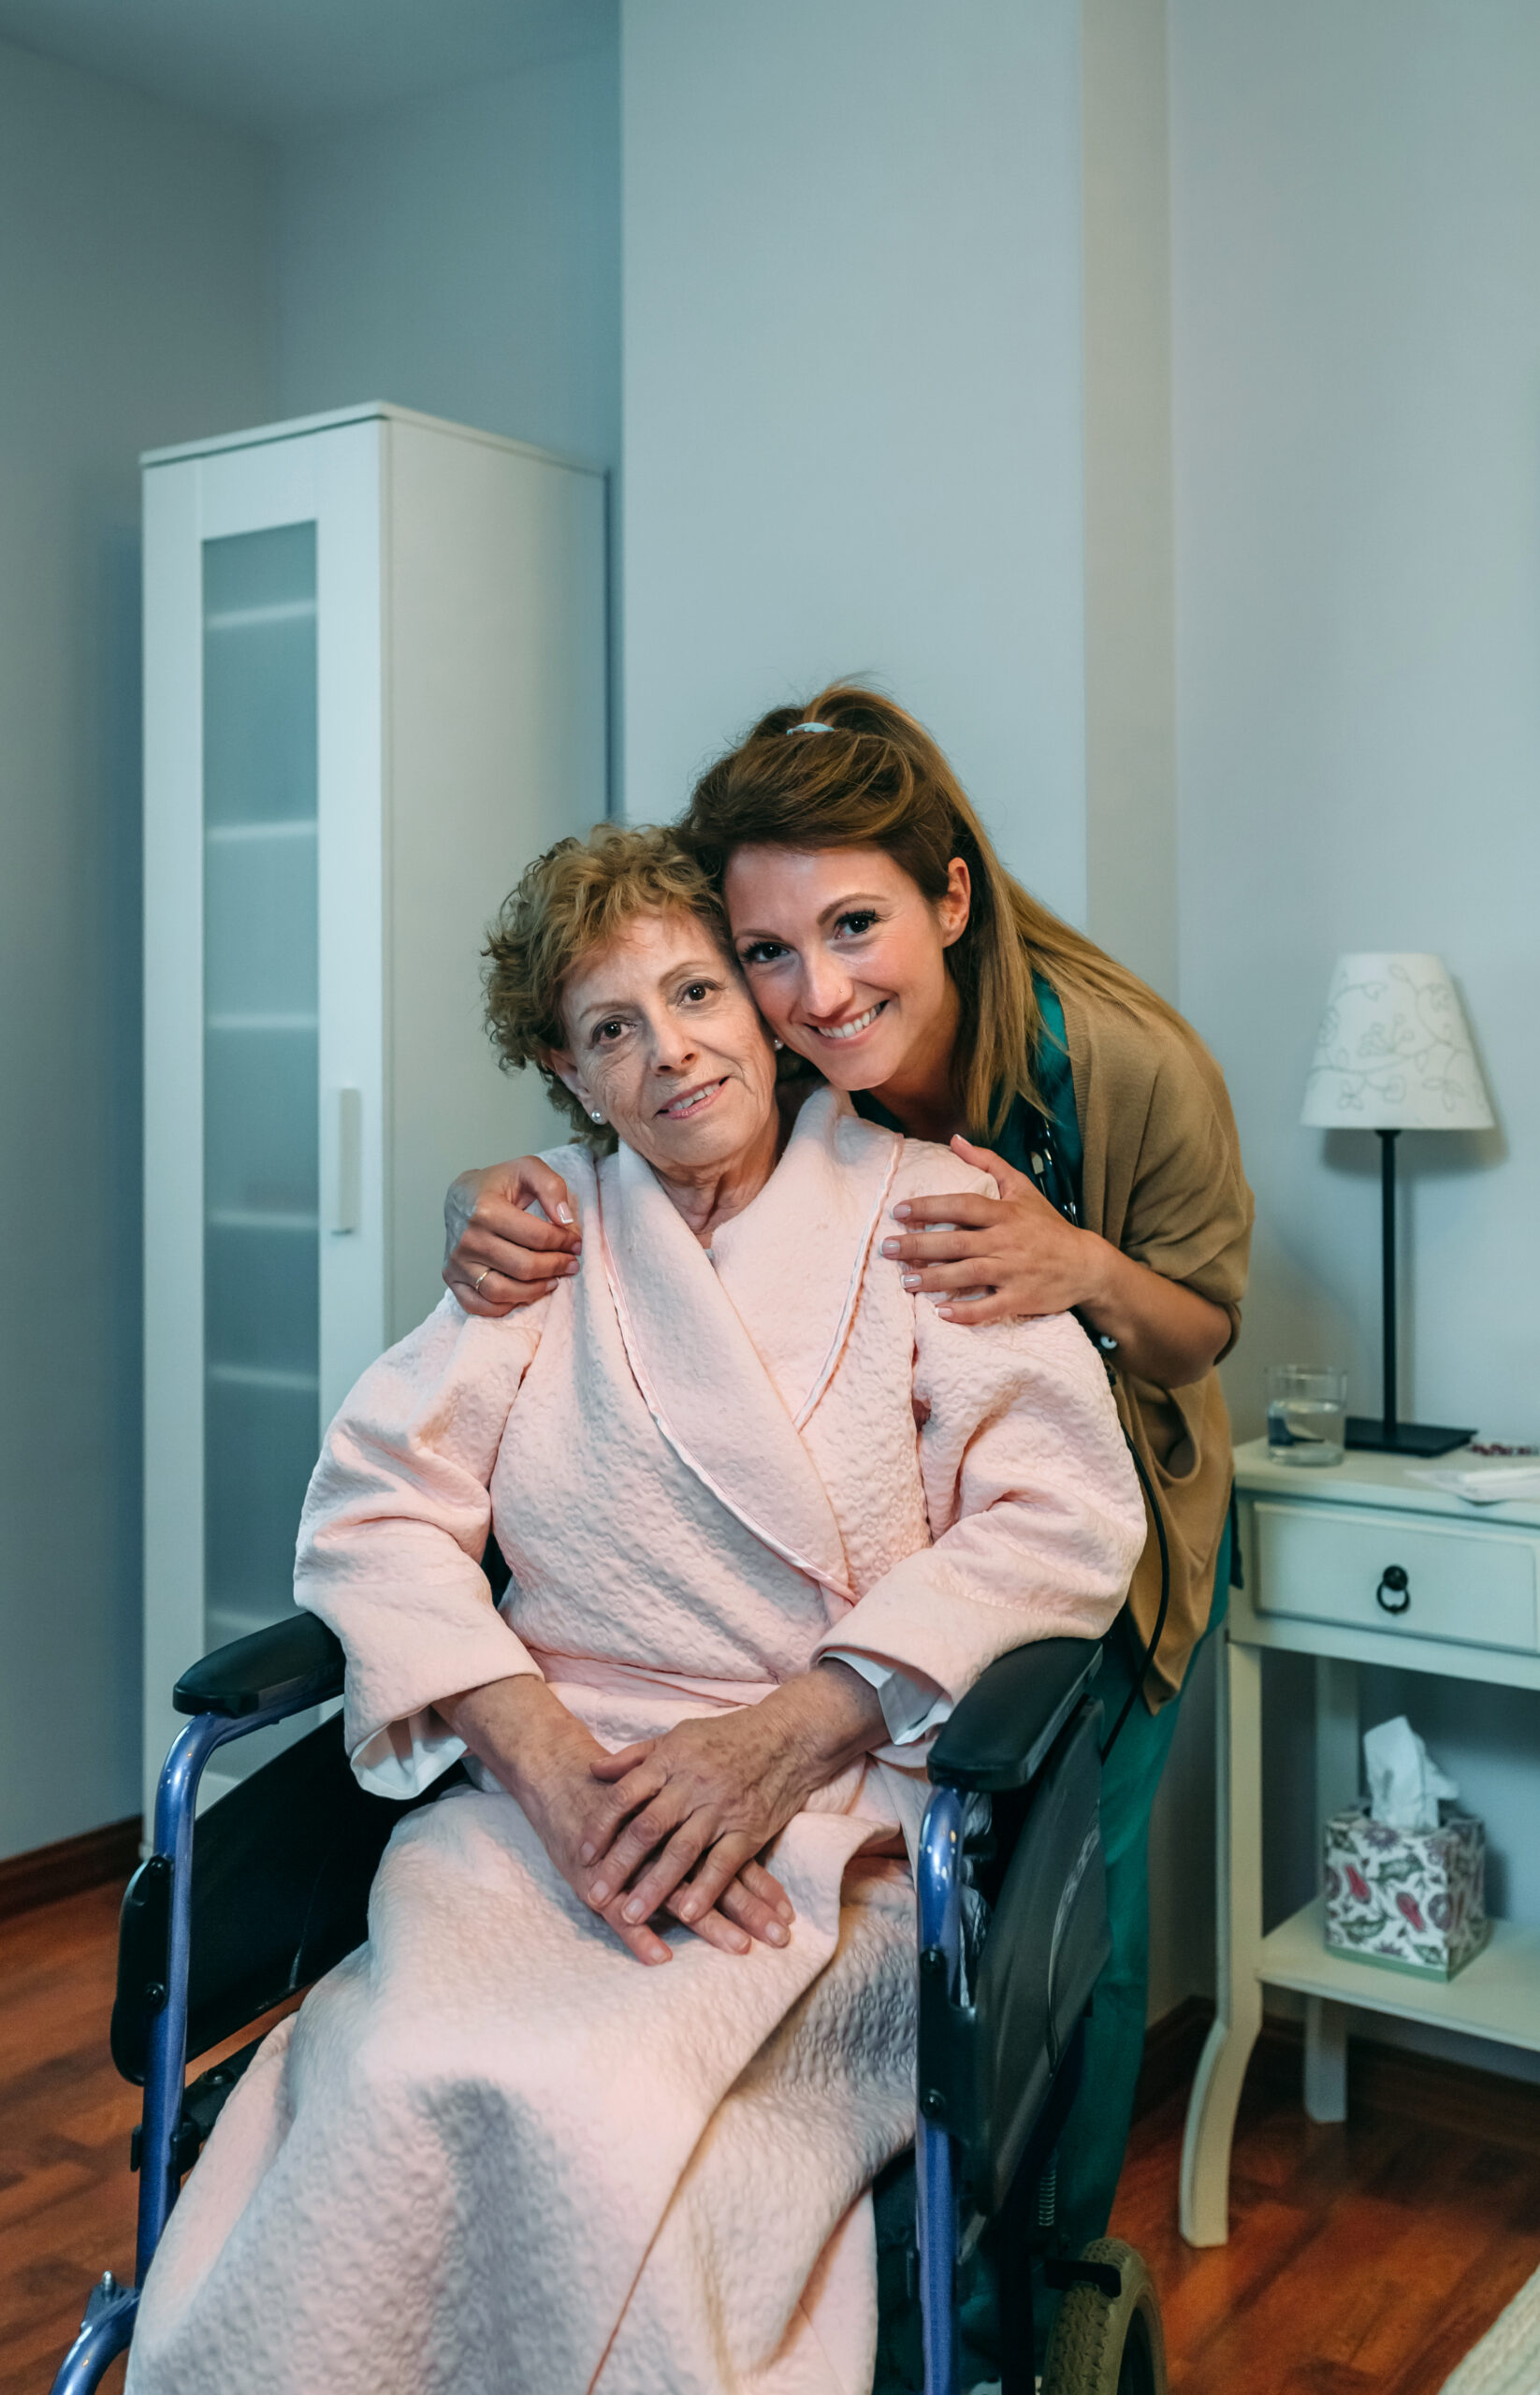 Affectionate female caretaker posing with elderly female patient